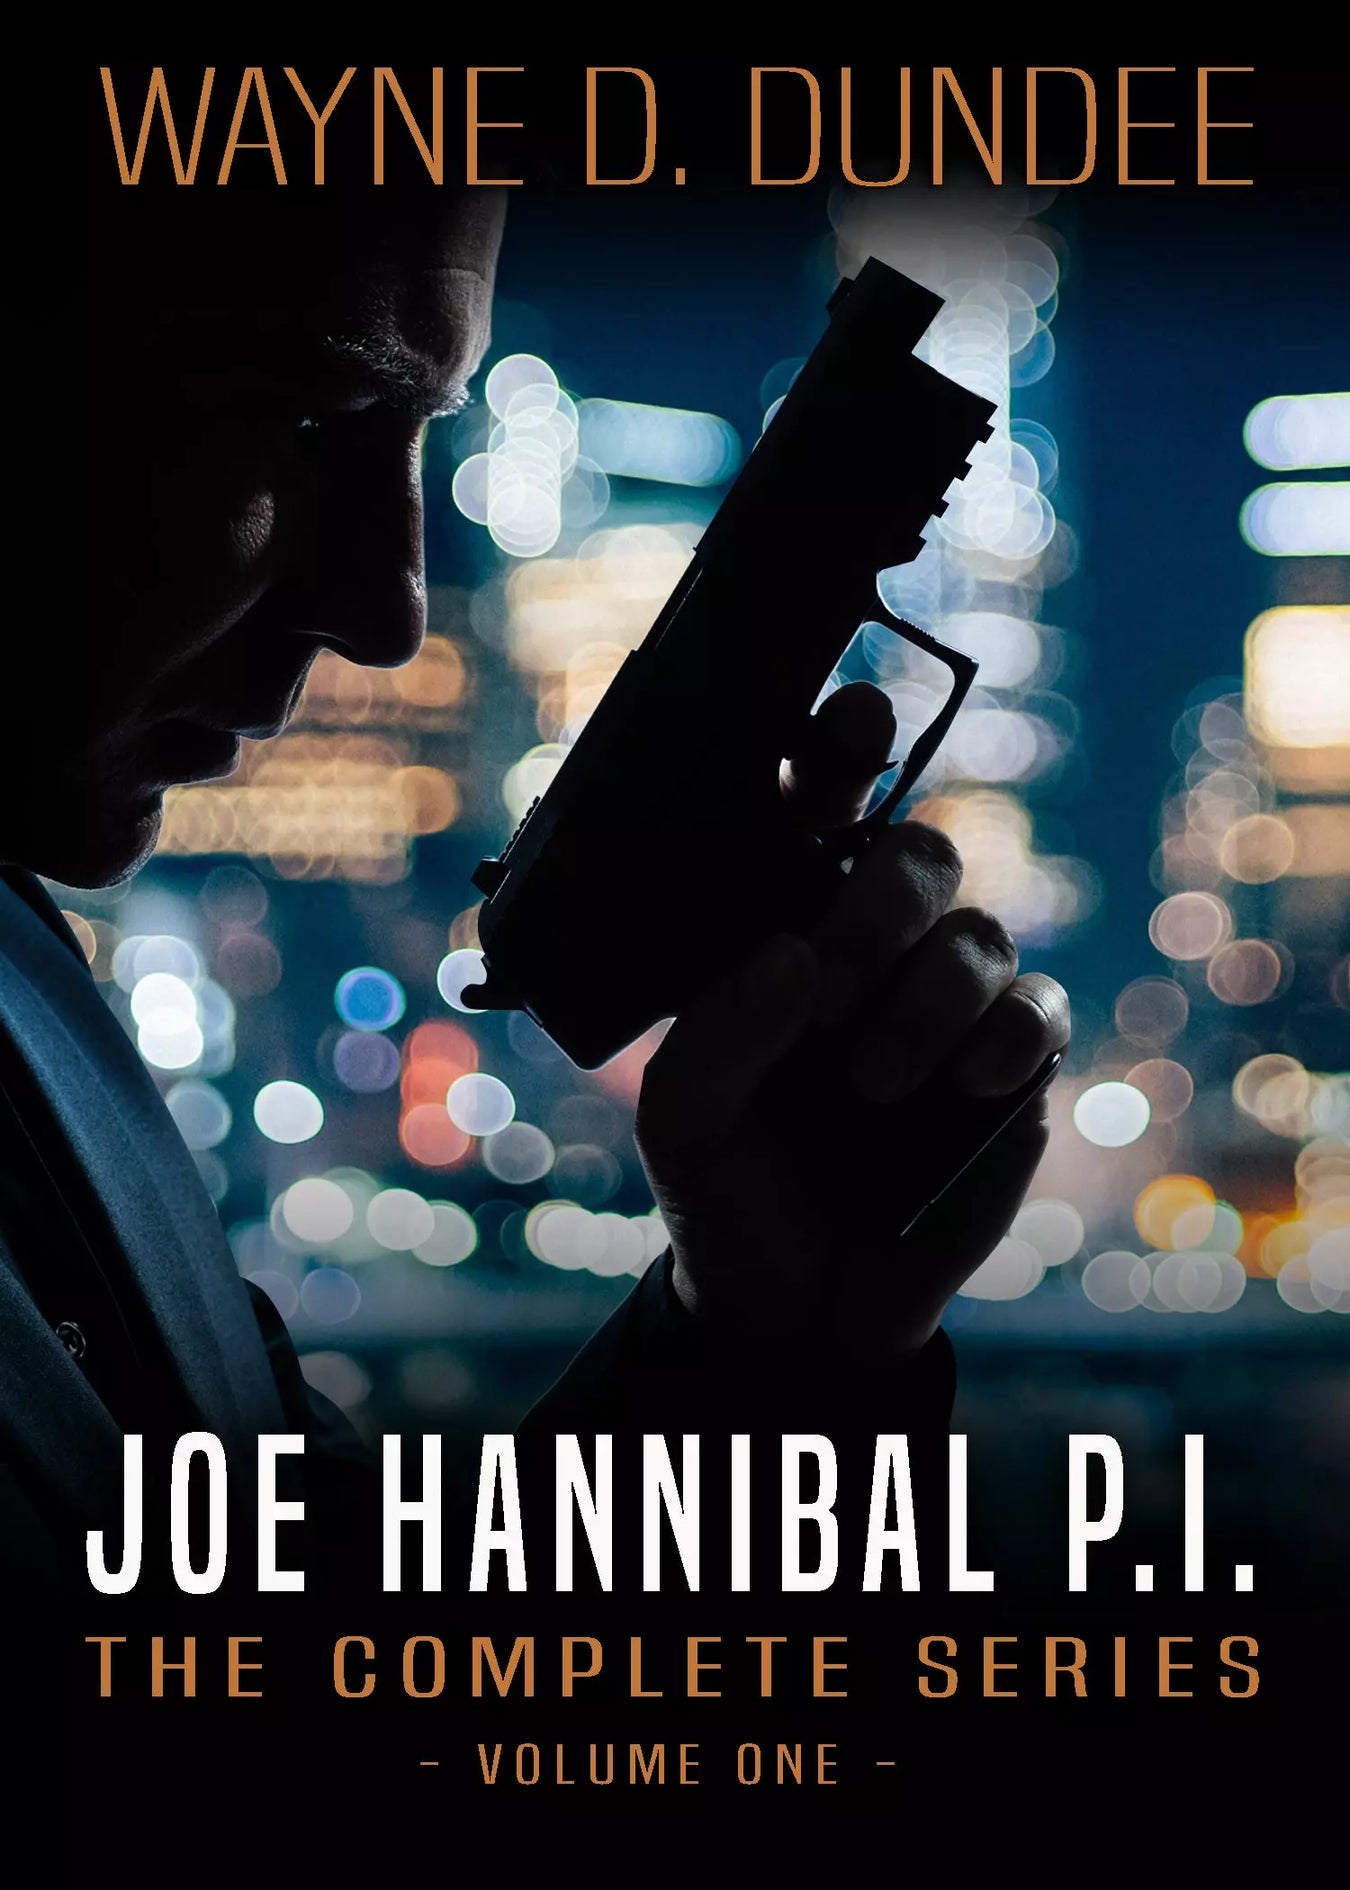 Joe Hannibal P.I.